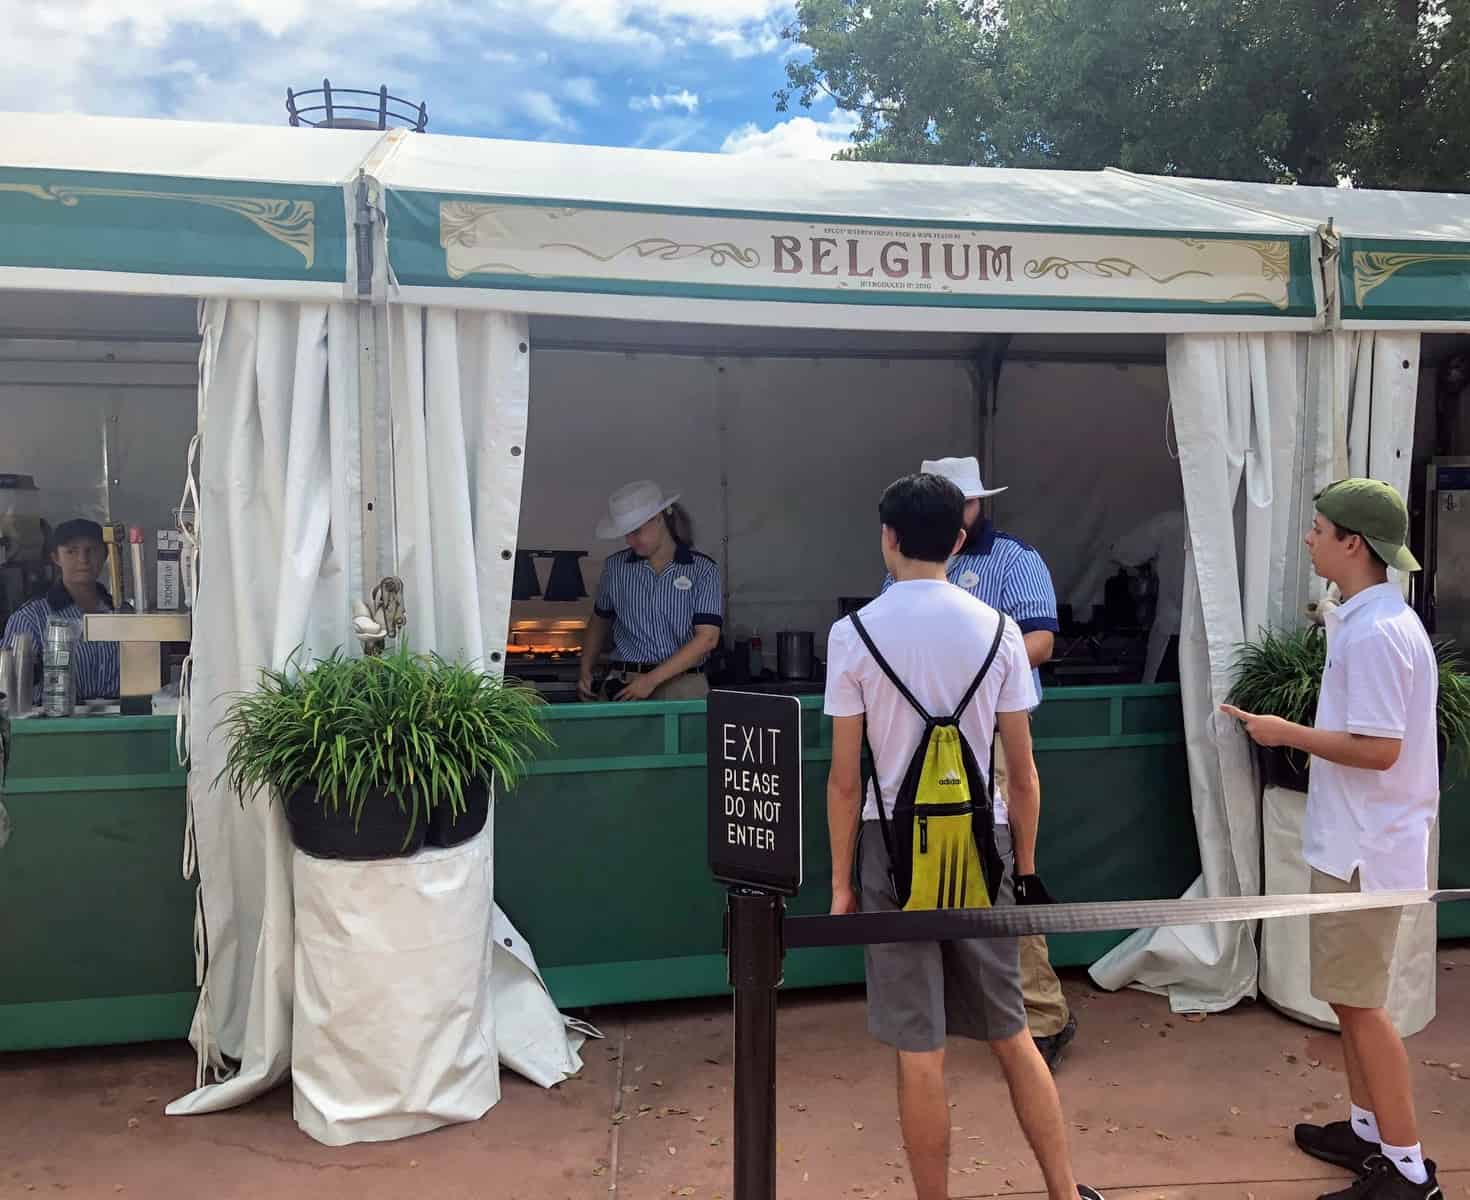 Belgium Booth Menu & Review (Epcot Food & Wine Festival)